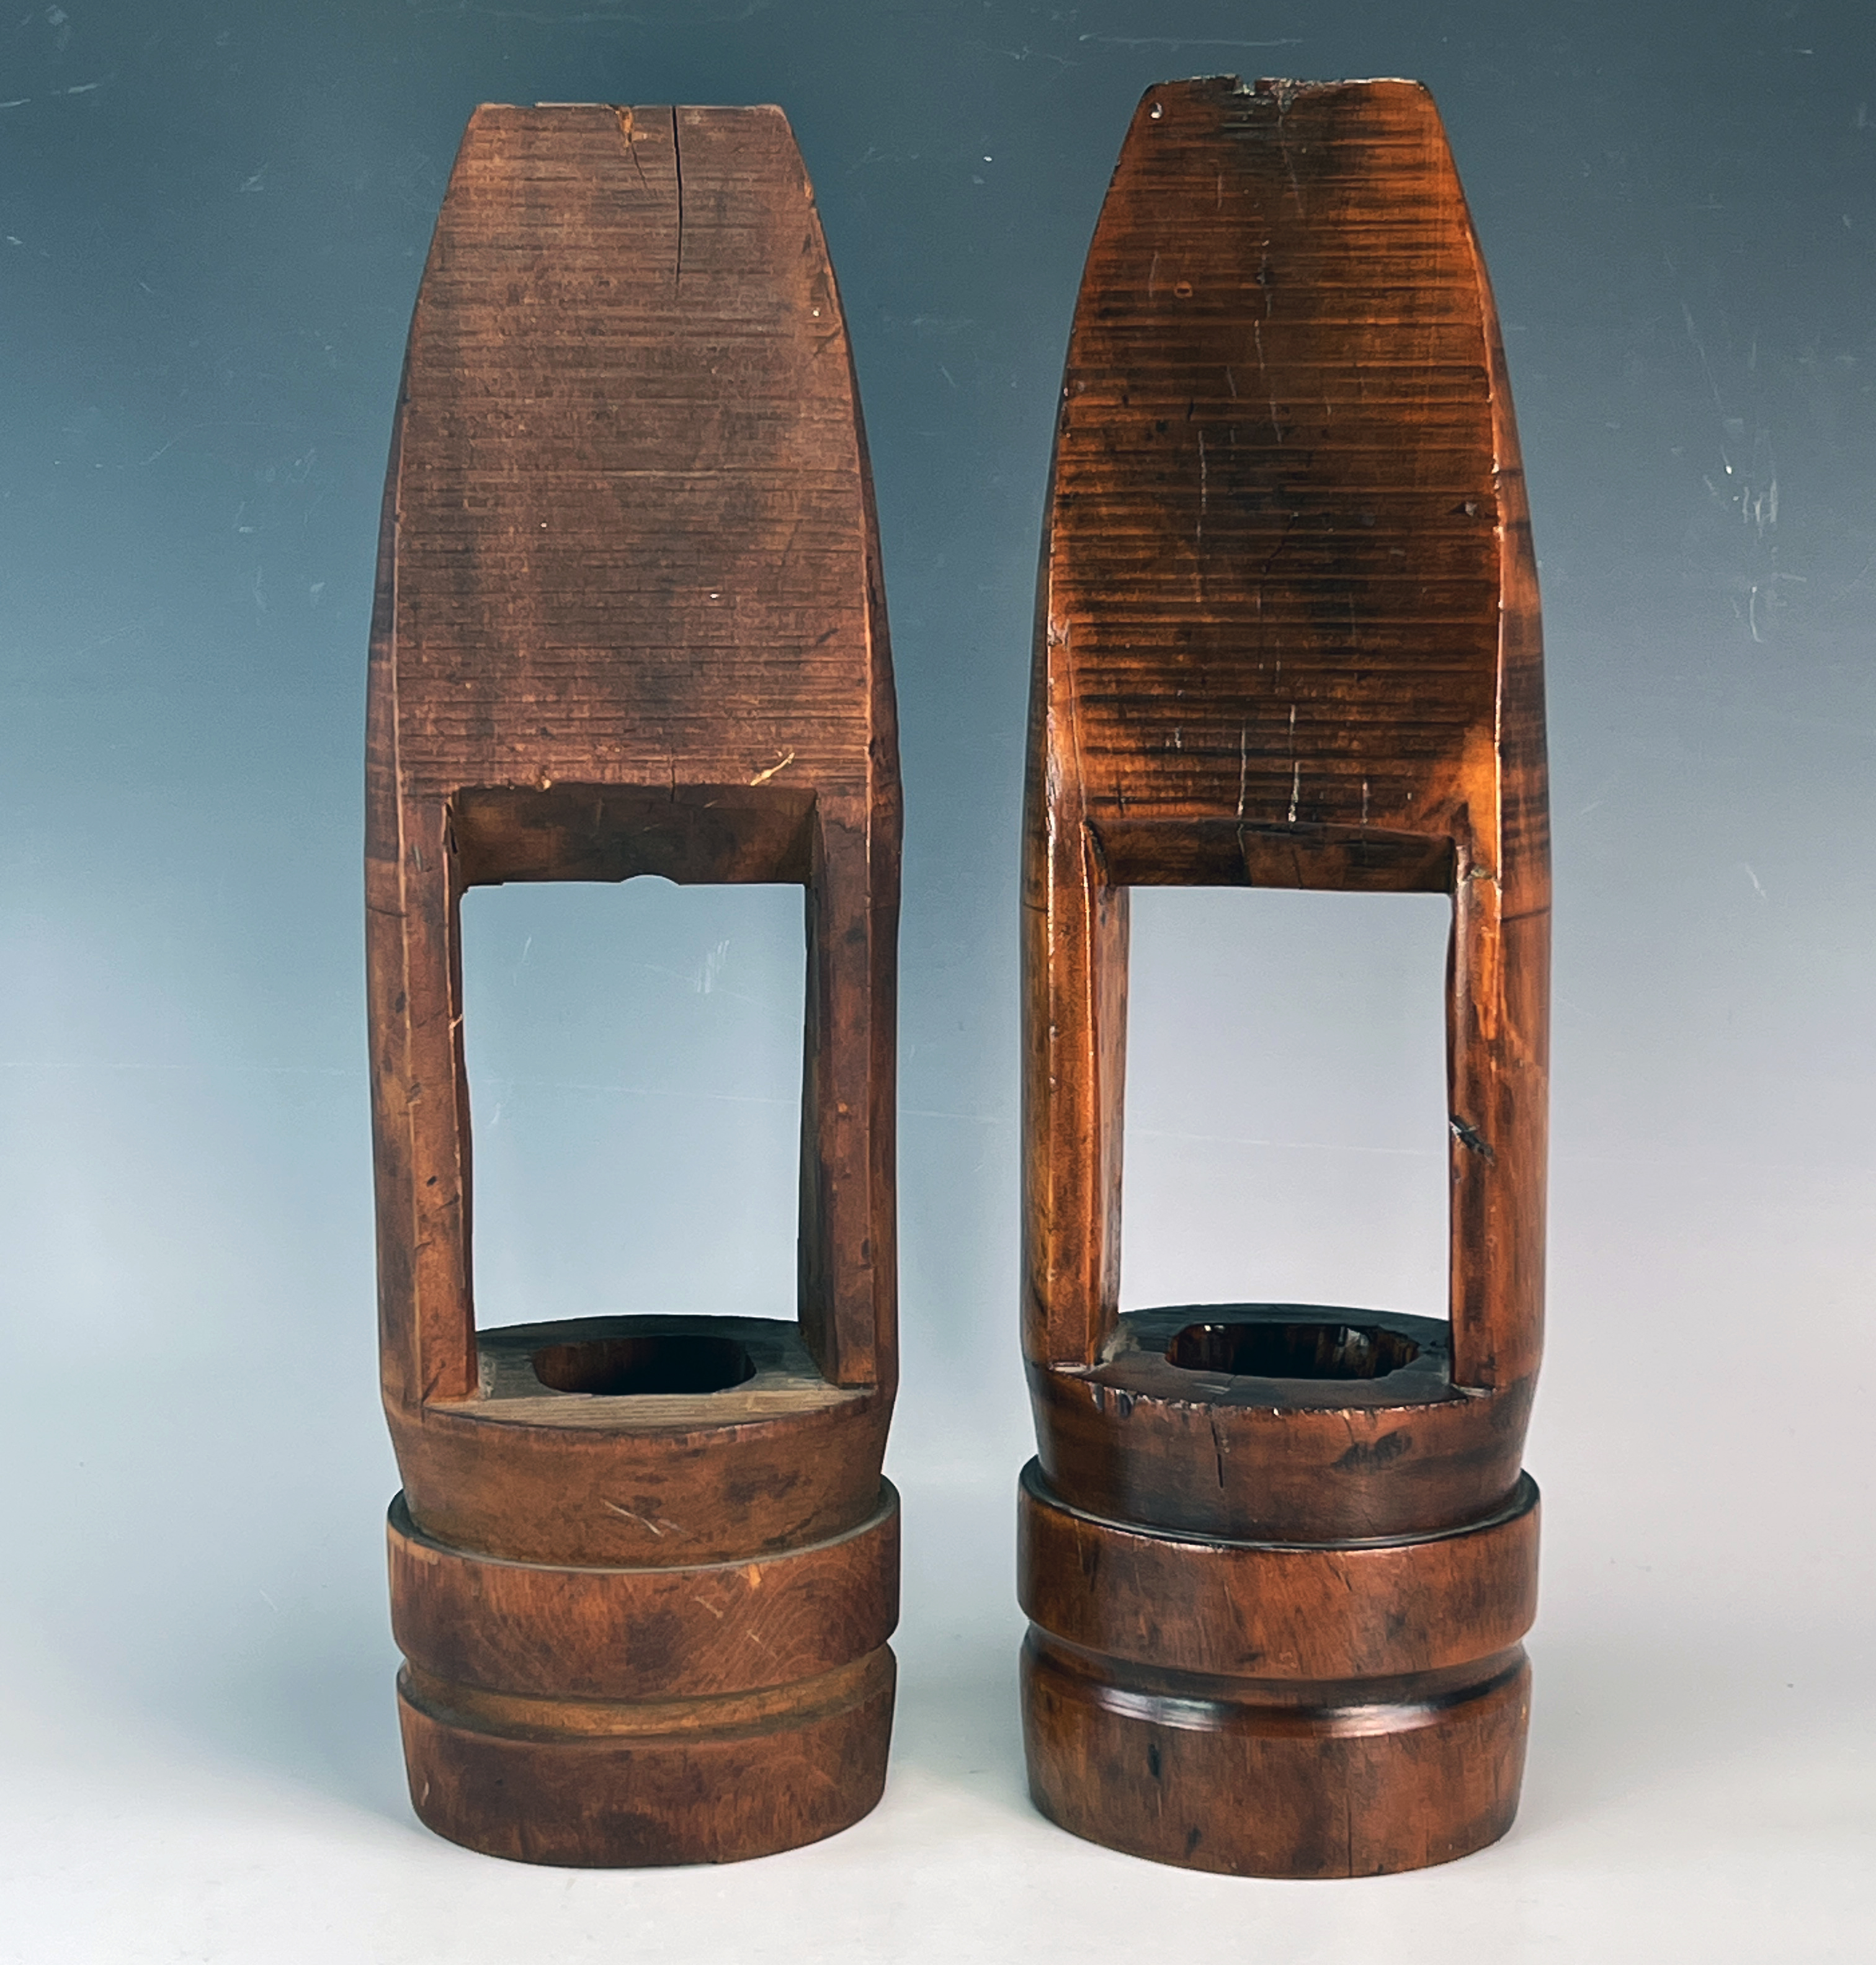 Vintage Primitive Wooden Tools image 1